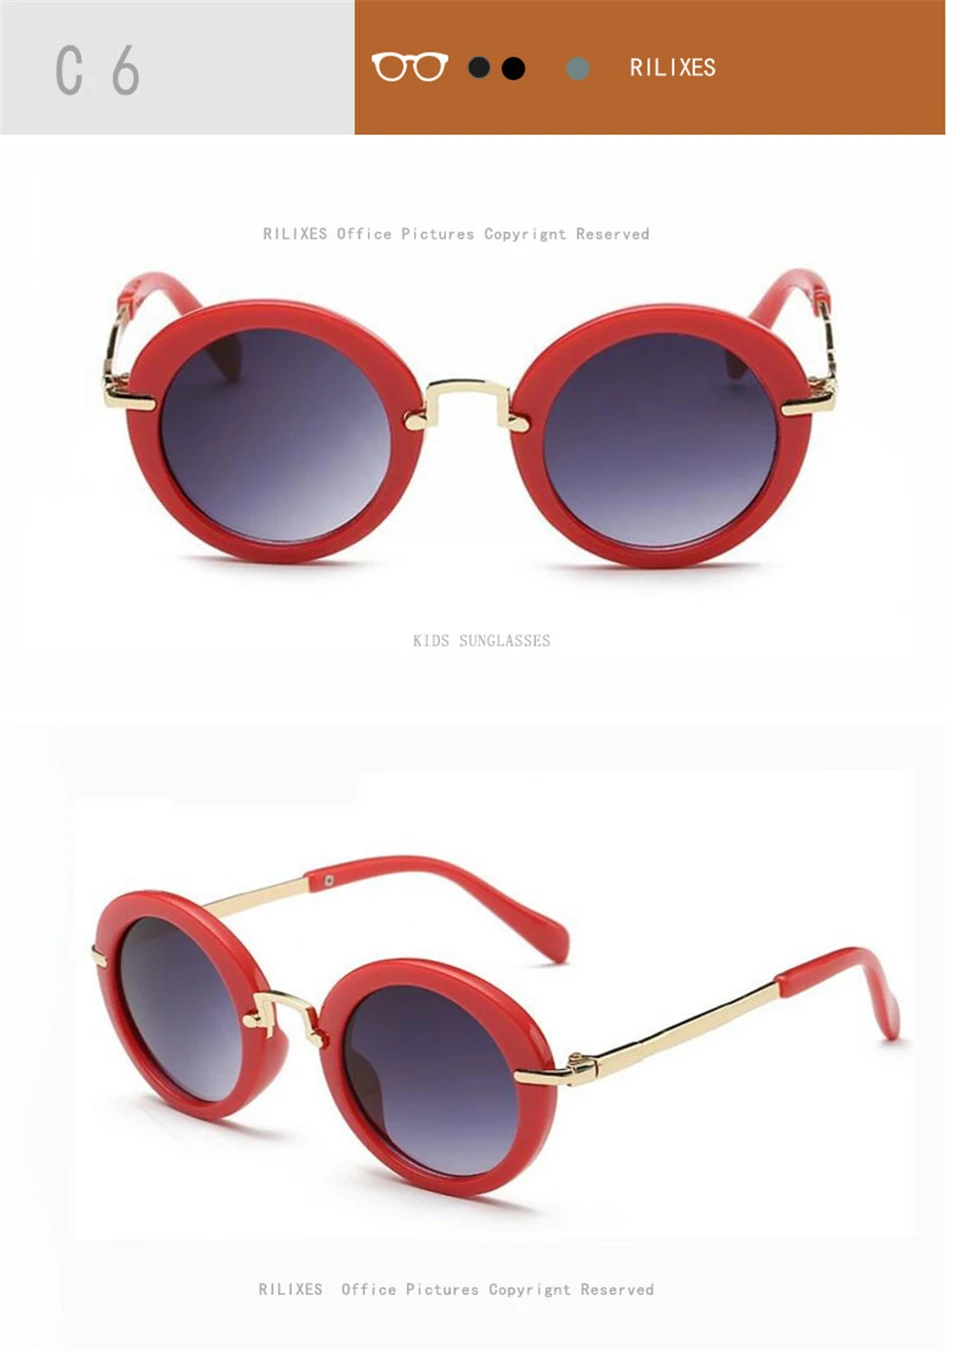 NEW Baby Girls Sunglasses Brand Designer UV400 Protection Lens Children Sun Glasses Cute Kids Sunglasses Cool Goggles (4)